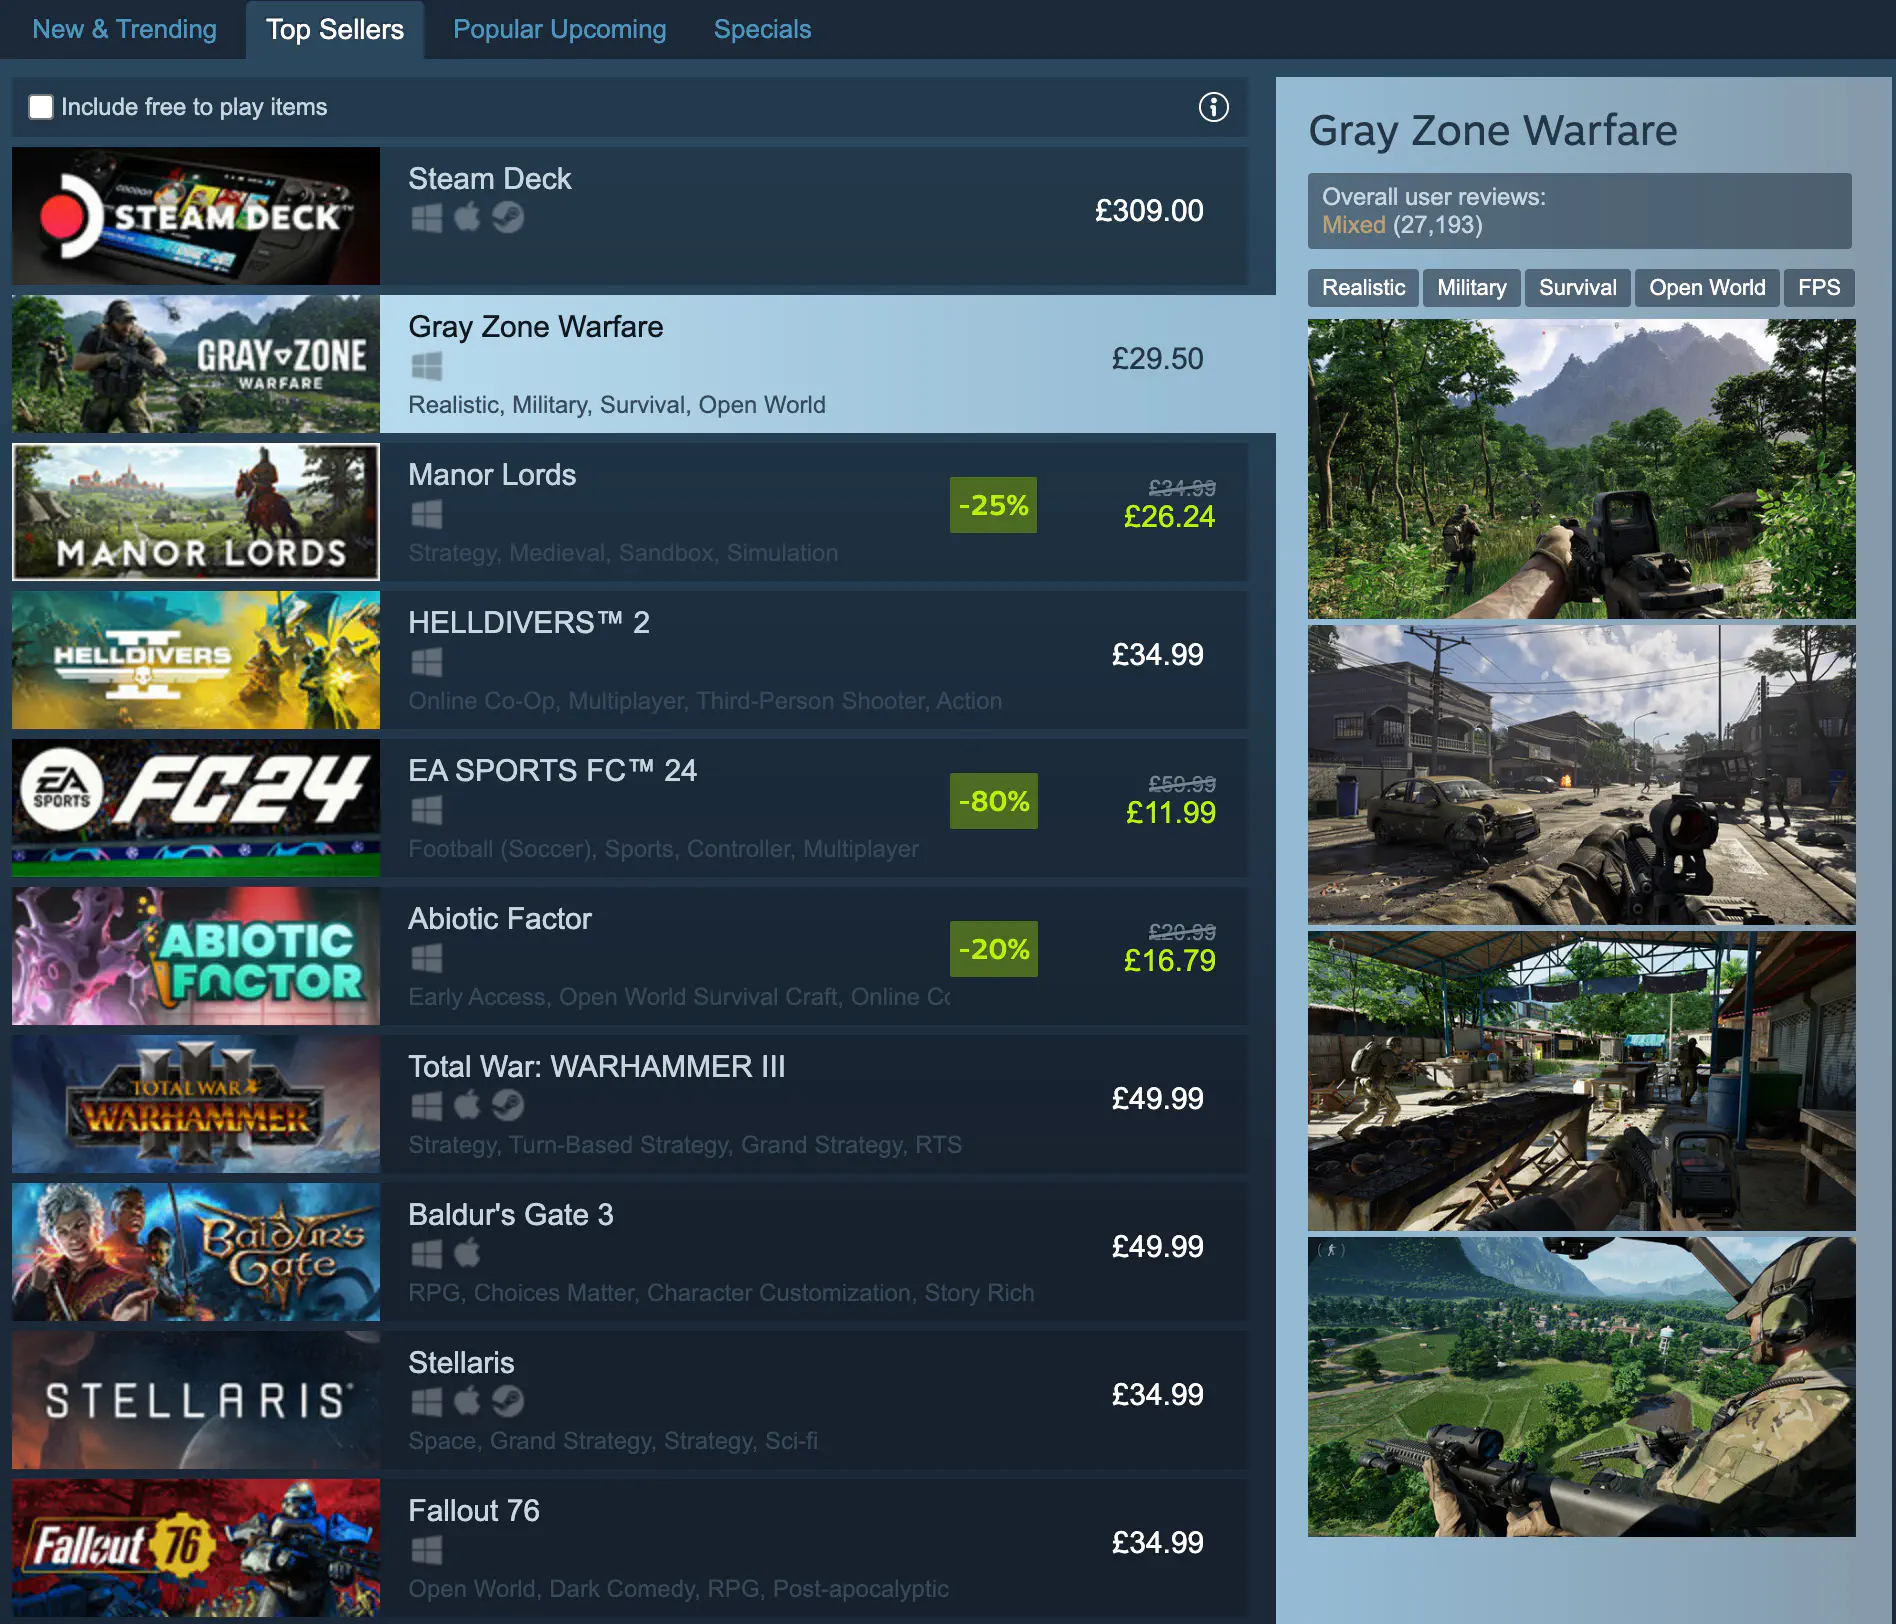 Gray Zone Warfare on Steam Top Sellers